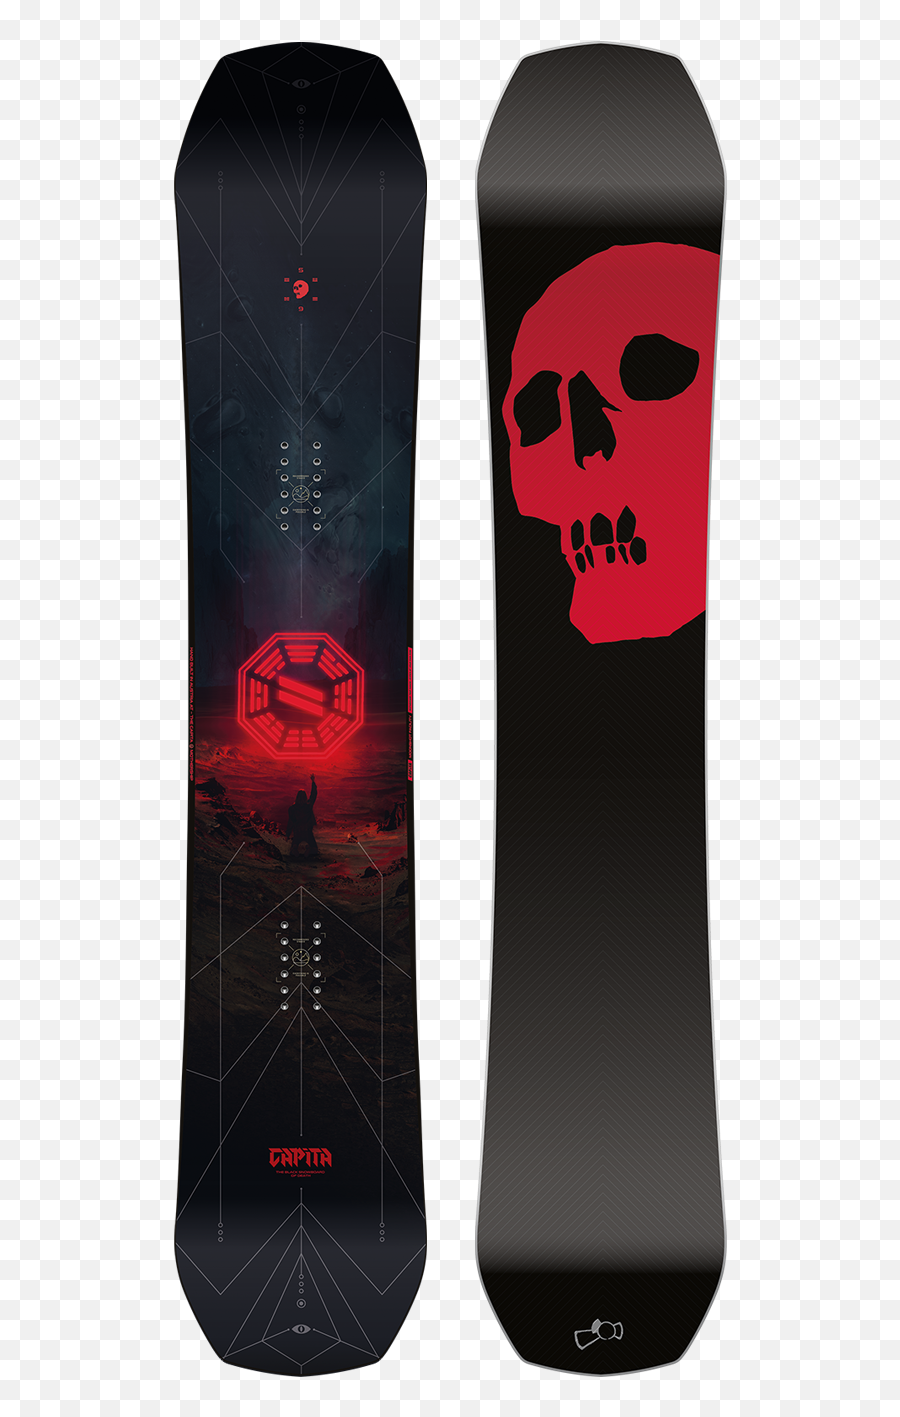 The Black Snowboard Of Death U2013 Capita Snowboarding - Capita Black Snowboard Of Death 2020 Png,Snowboarder Png